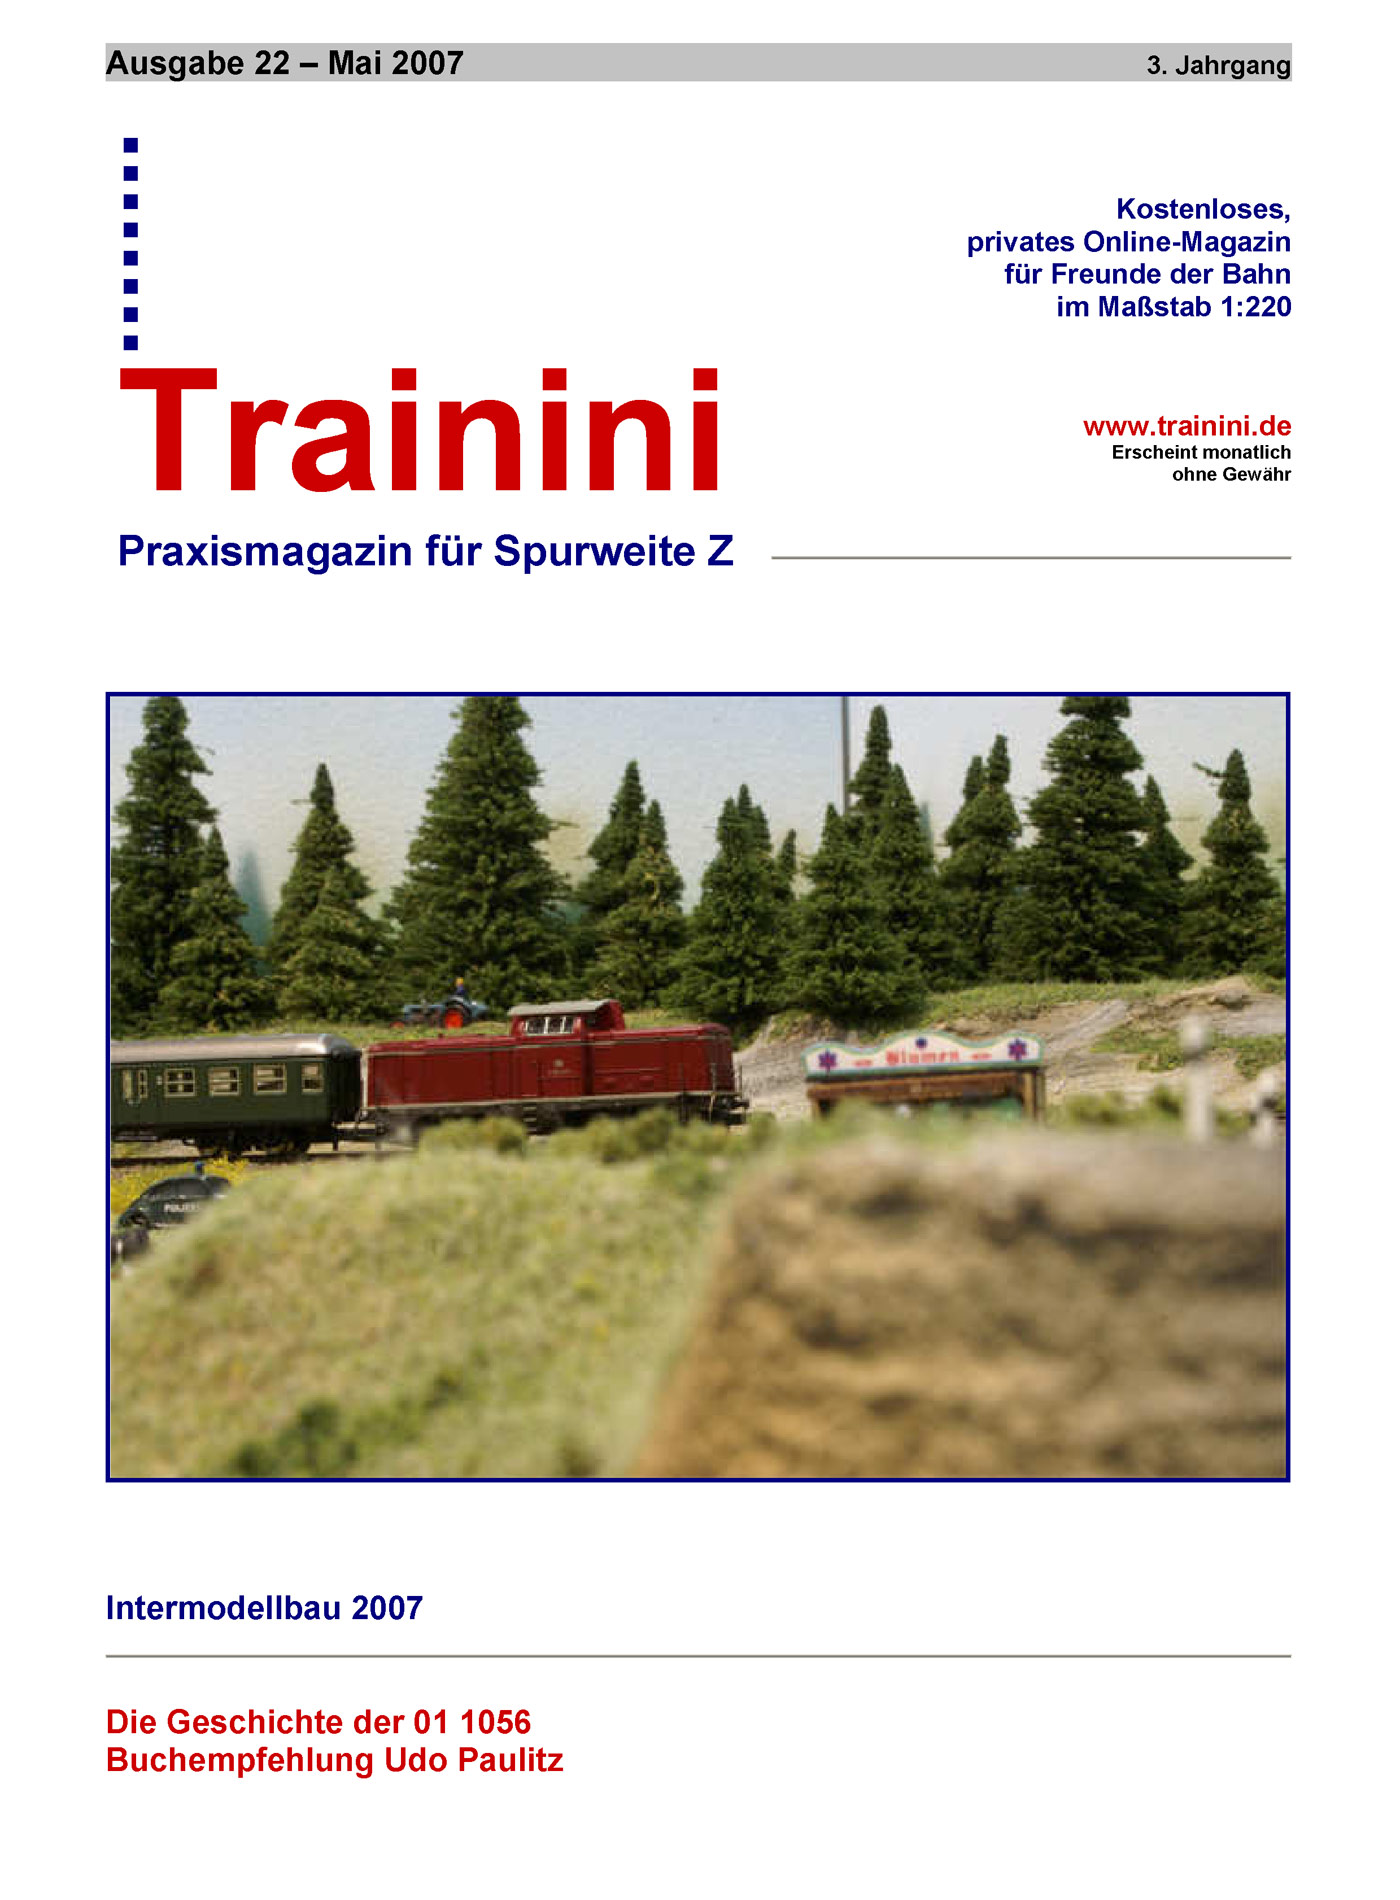 Trainini Ausgabe Mai 2007